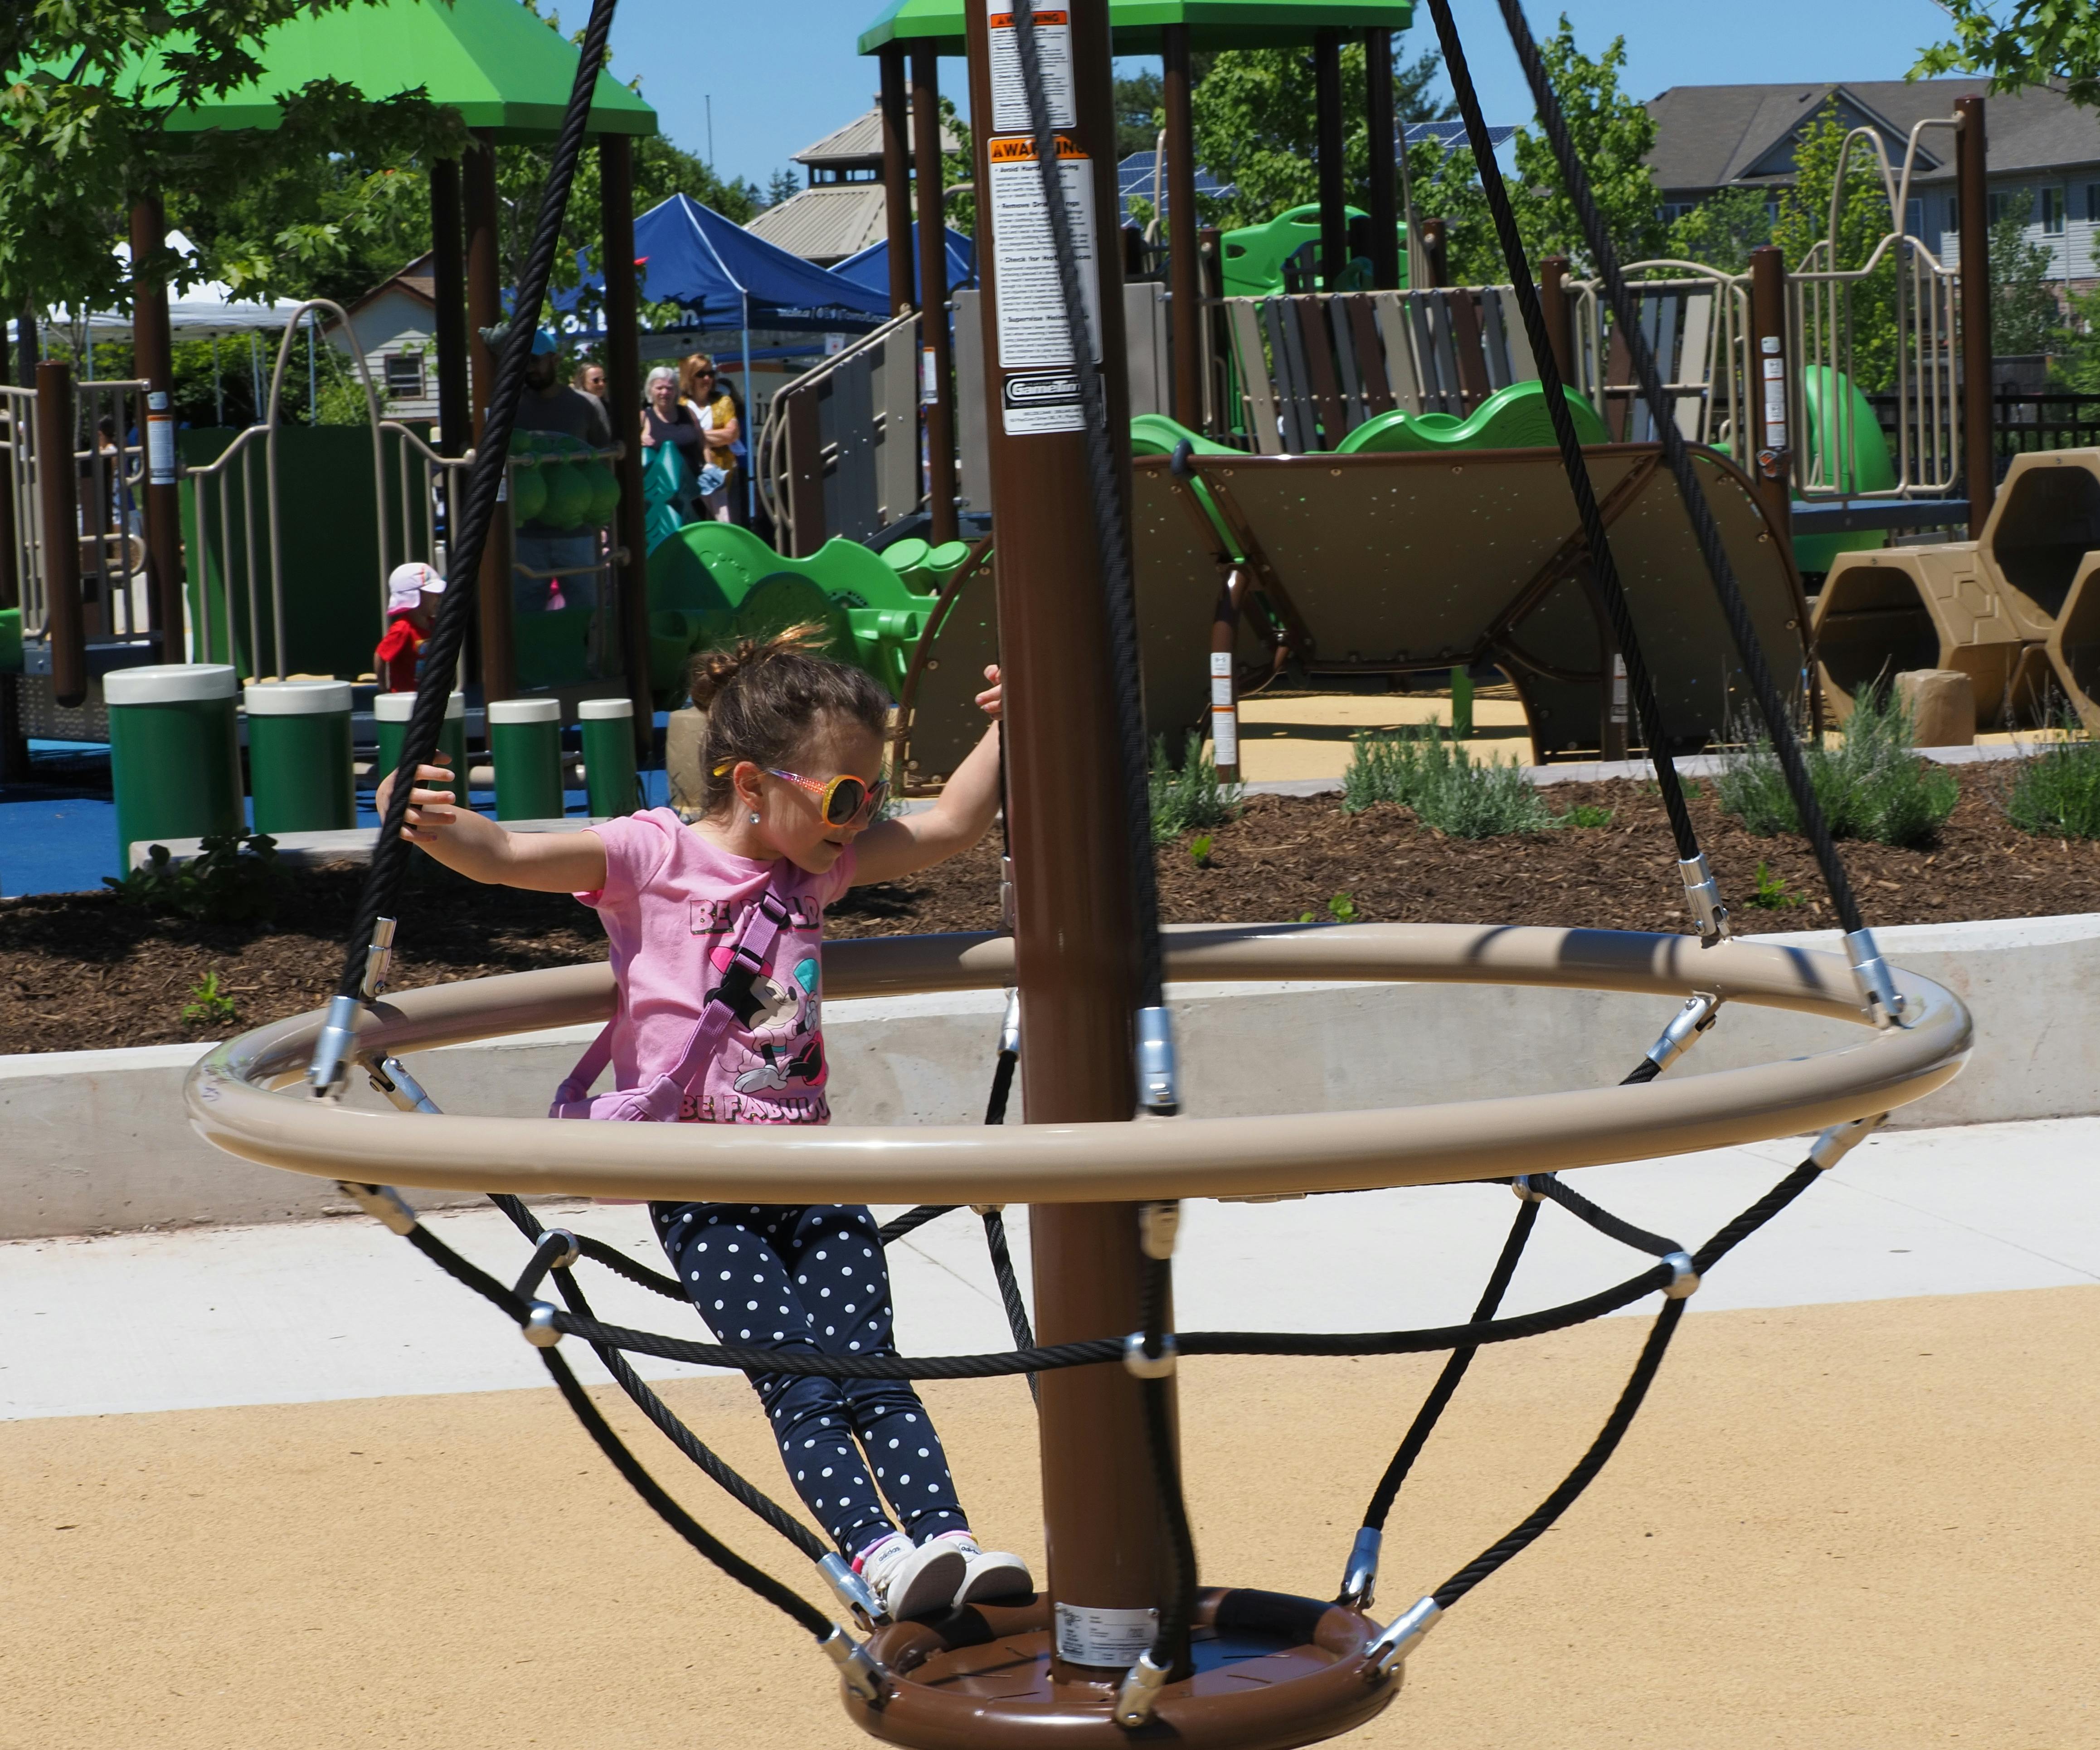 Lincoln residents enjoying the playground equipment